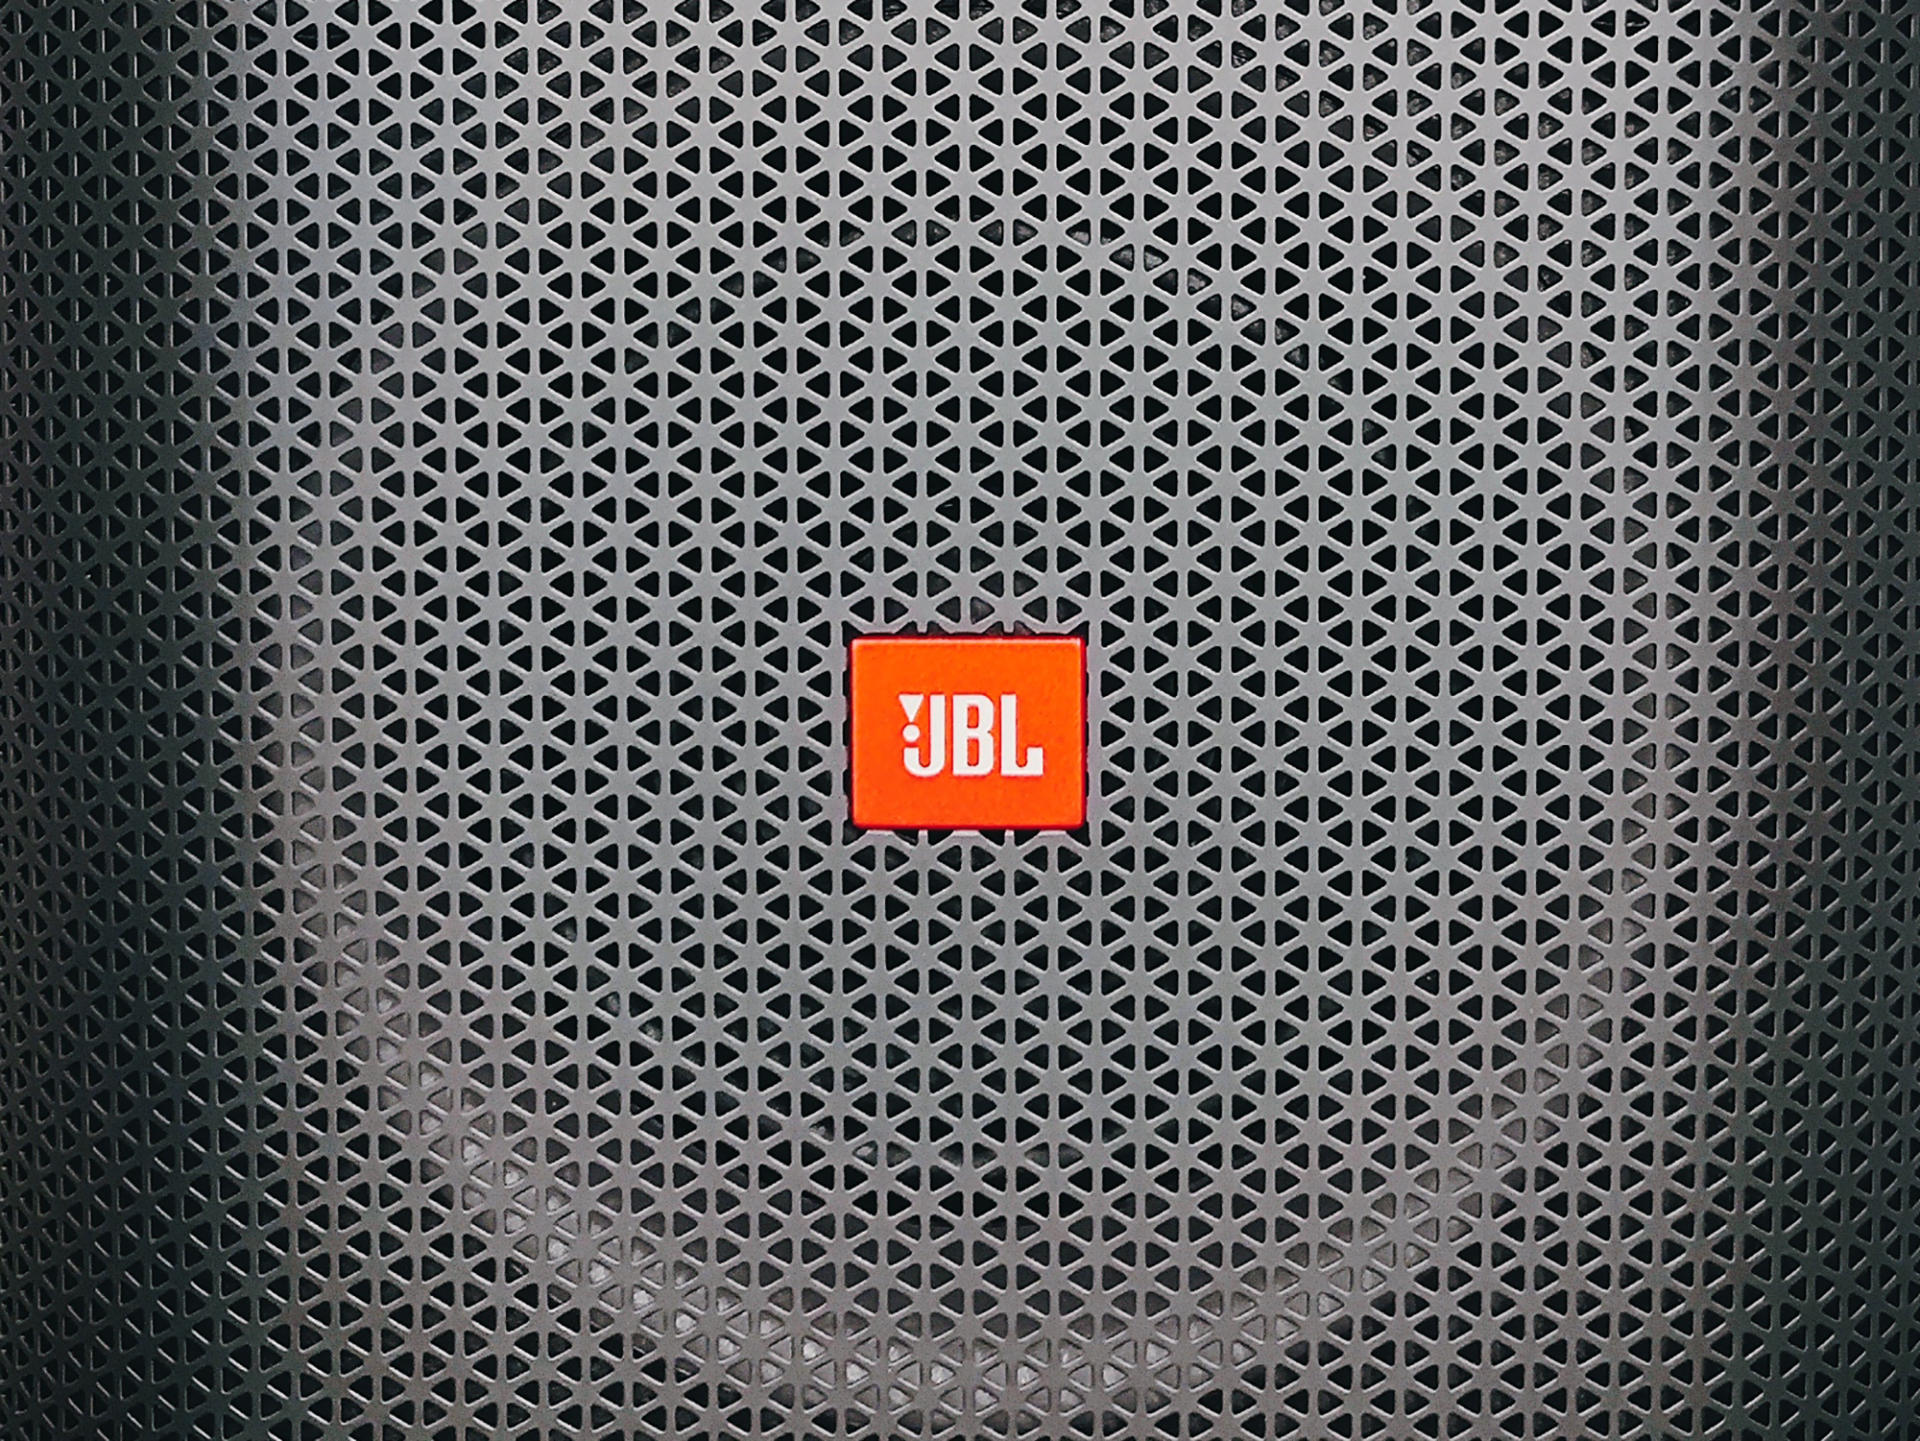 JBL新品音乐战将体验，户外小聚氛围感拉满